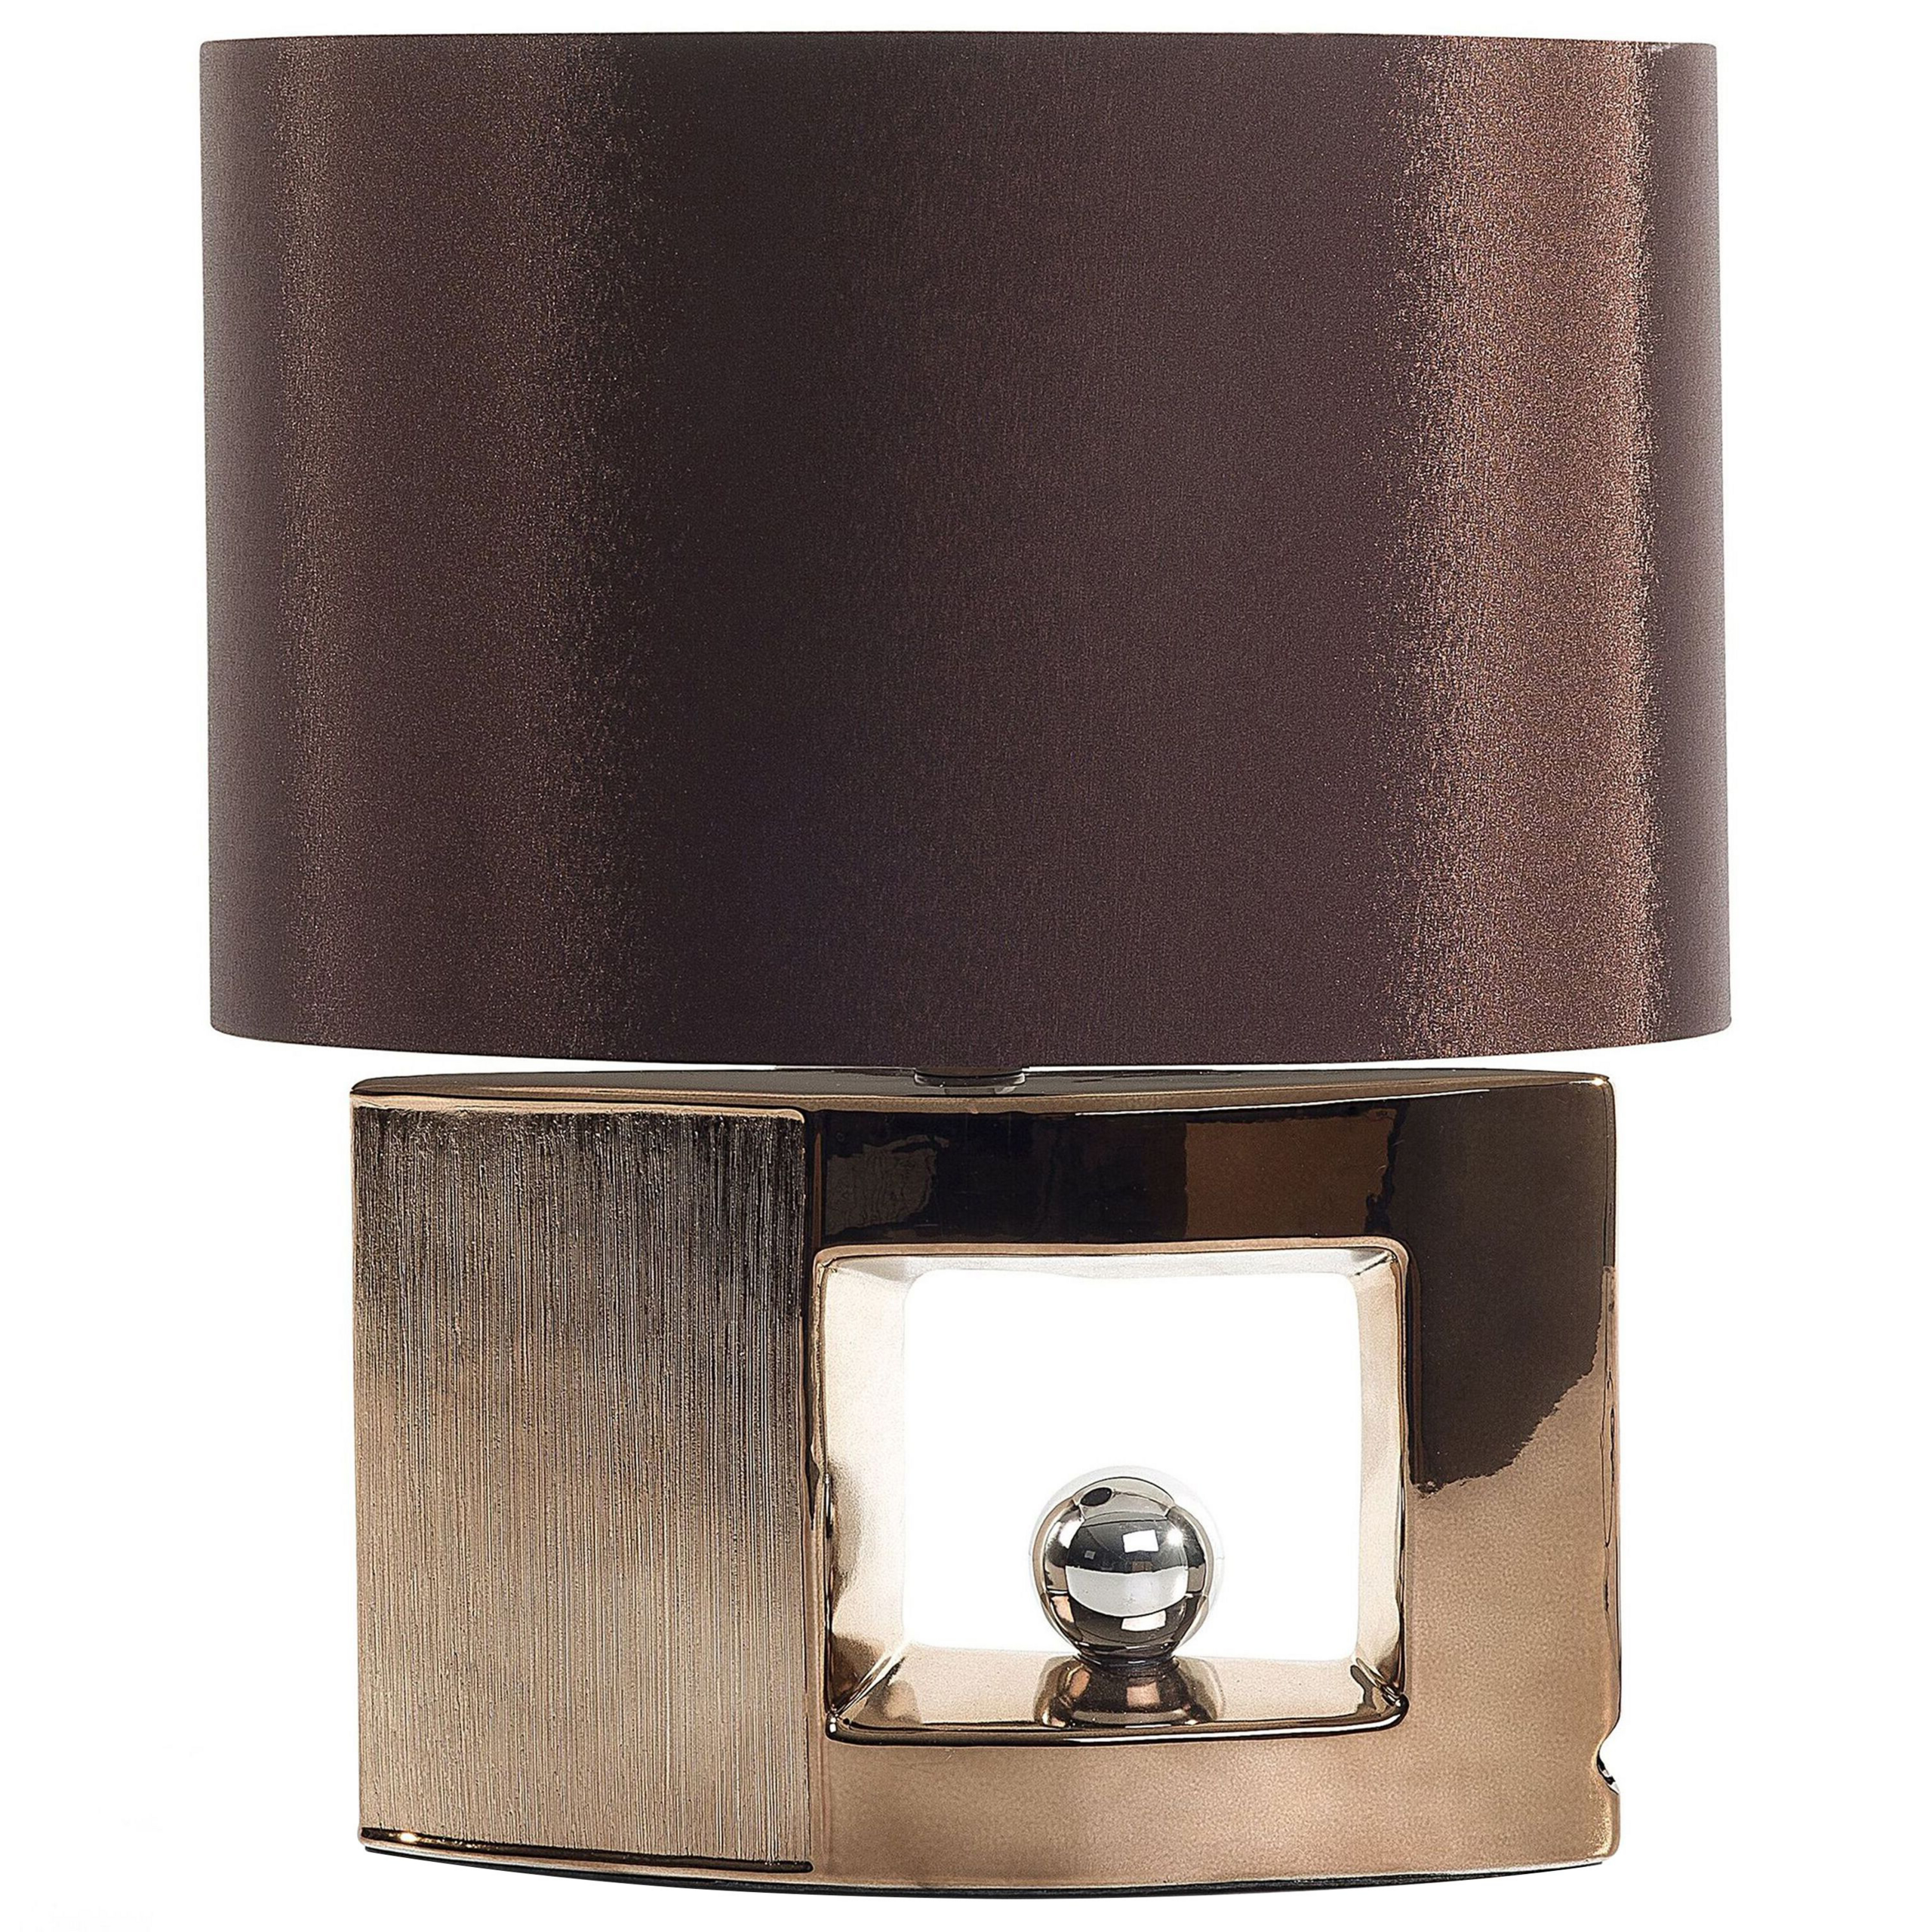 Beliani Table Lamp Brown Ceramic Base Fabric Drum Shade Bedside Table Lamp